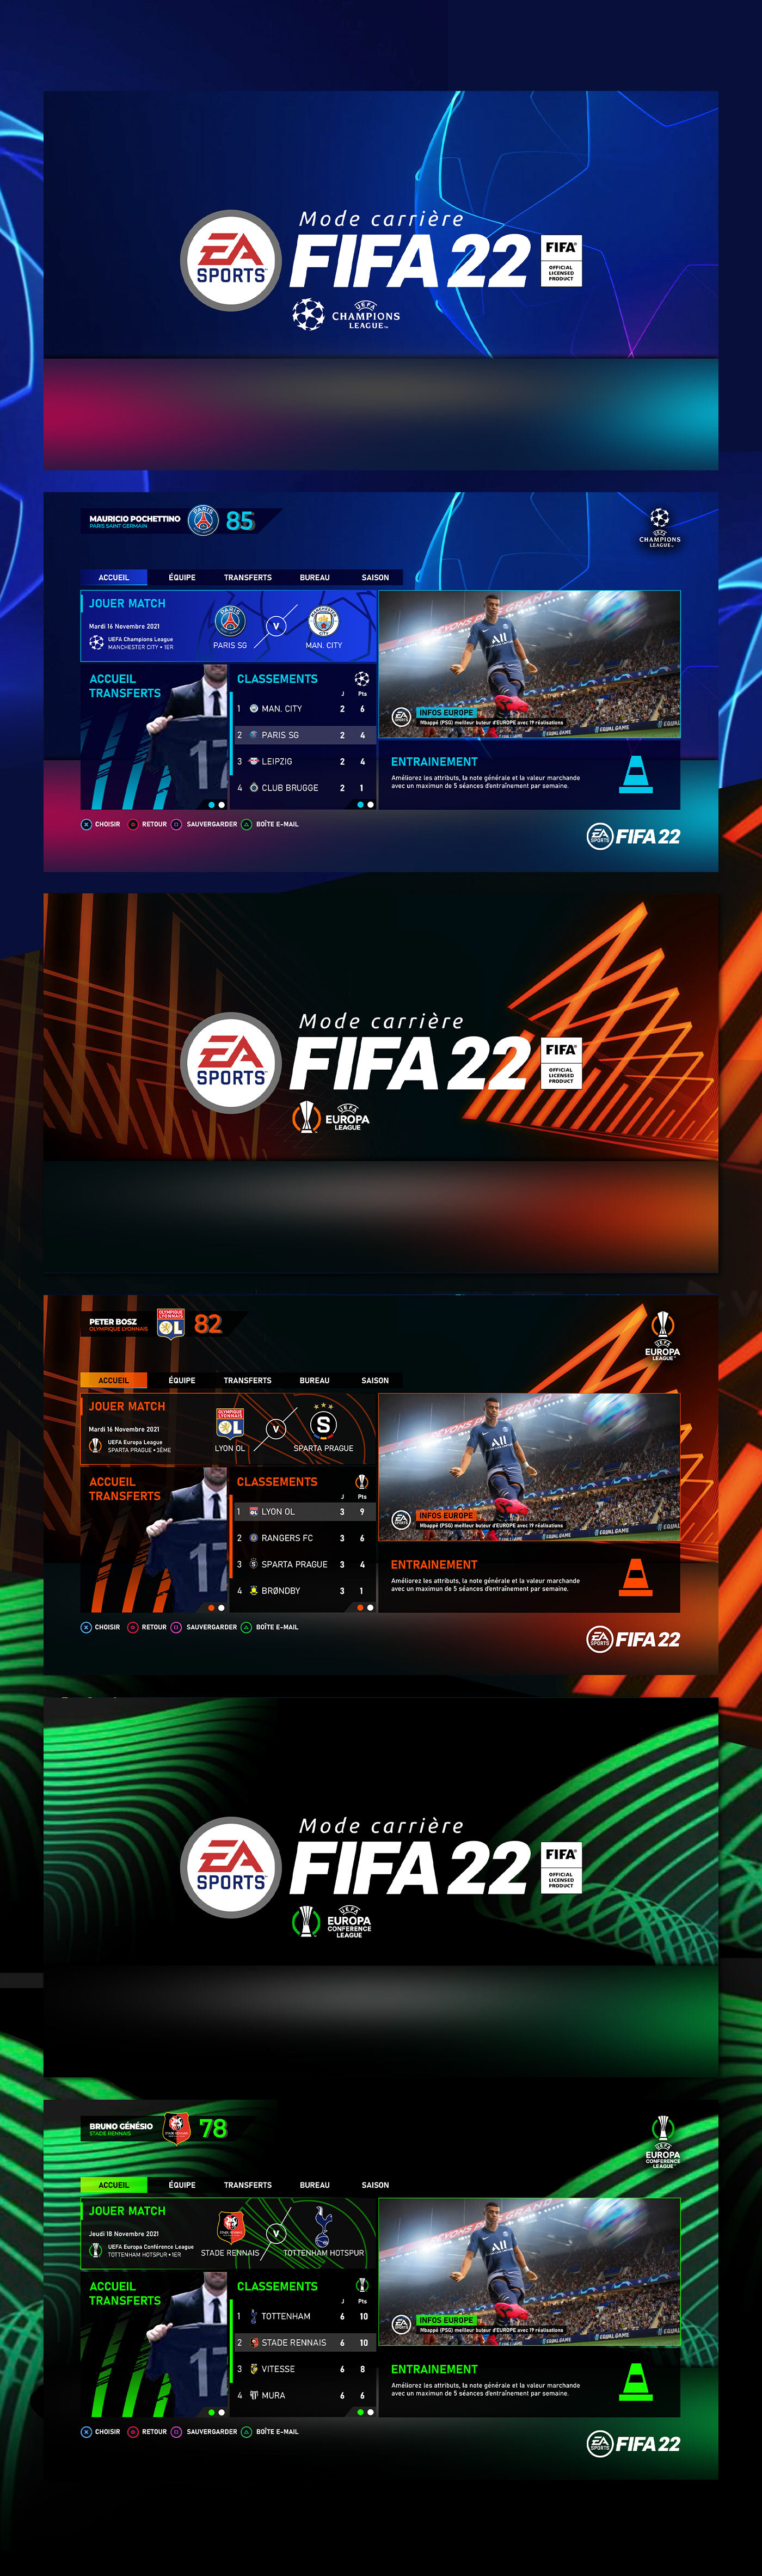 easports FIFA22 football